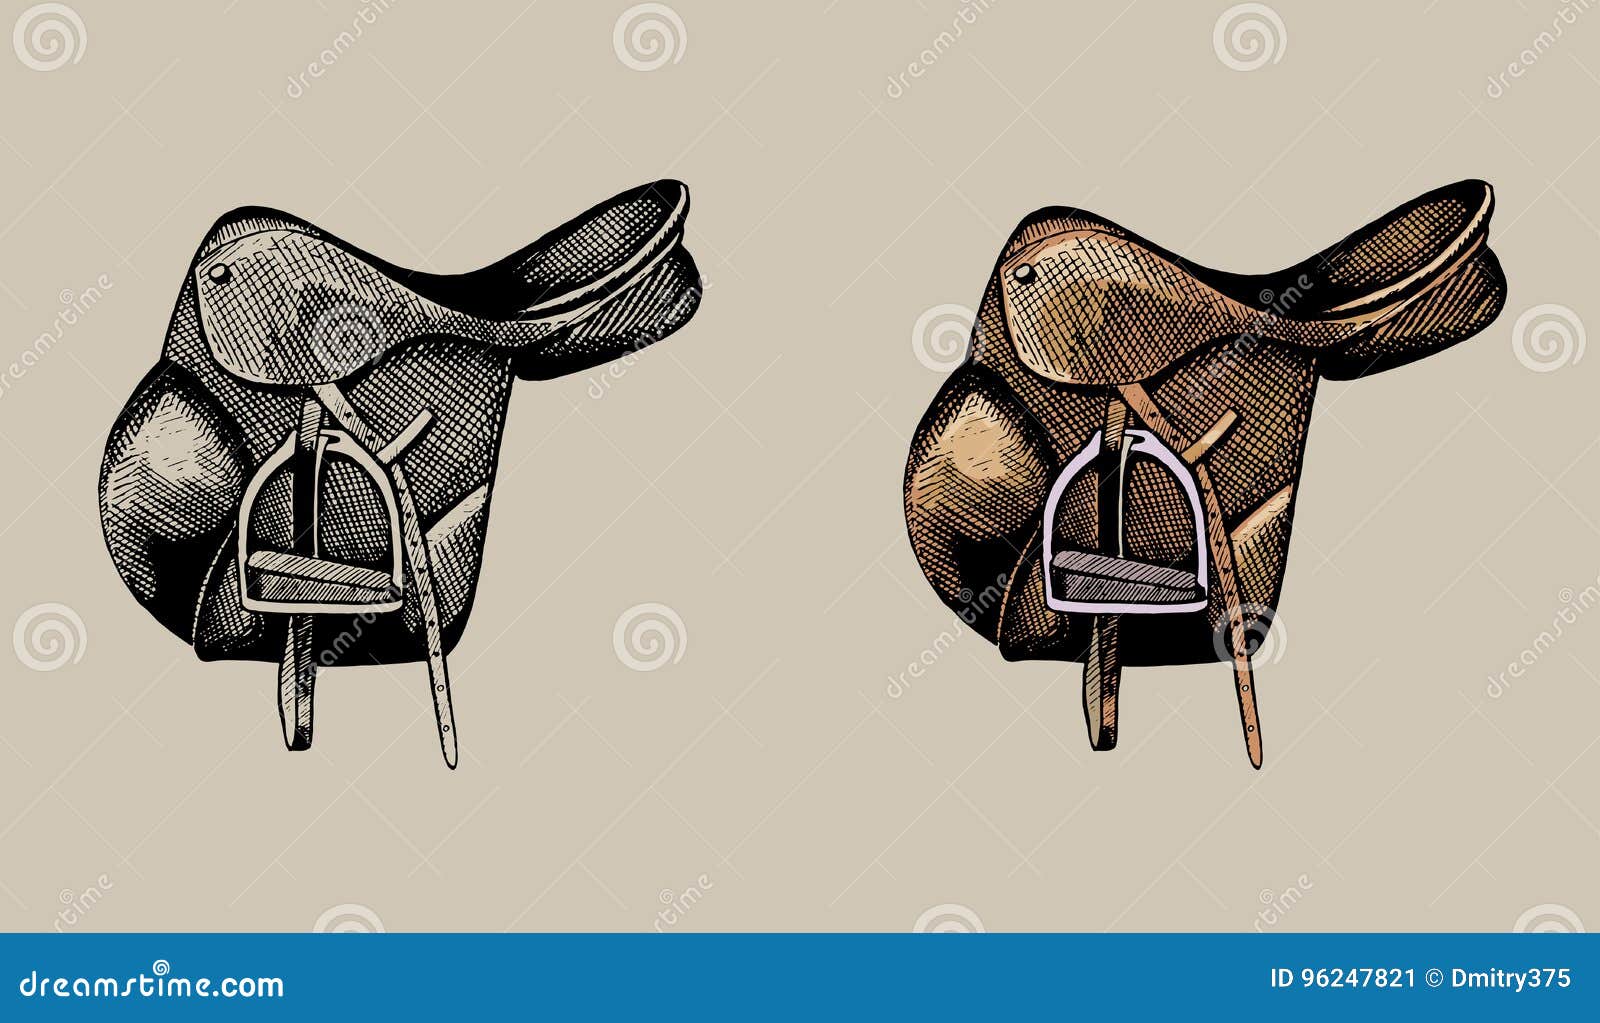 leather equestrian saddle, hand drawn 